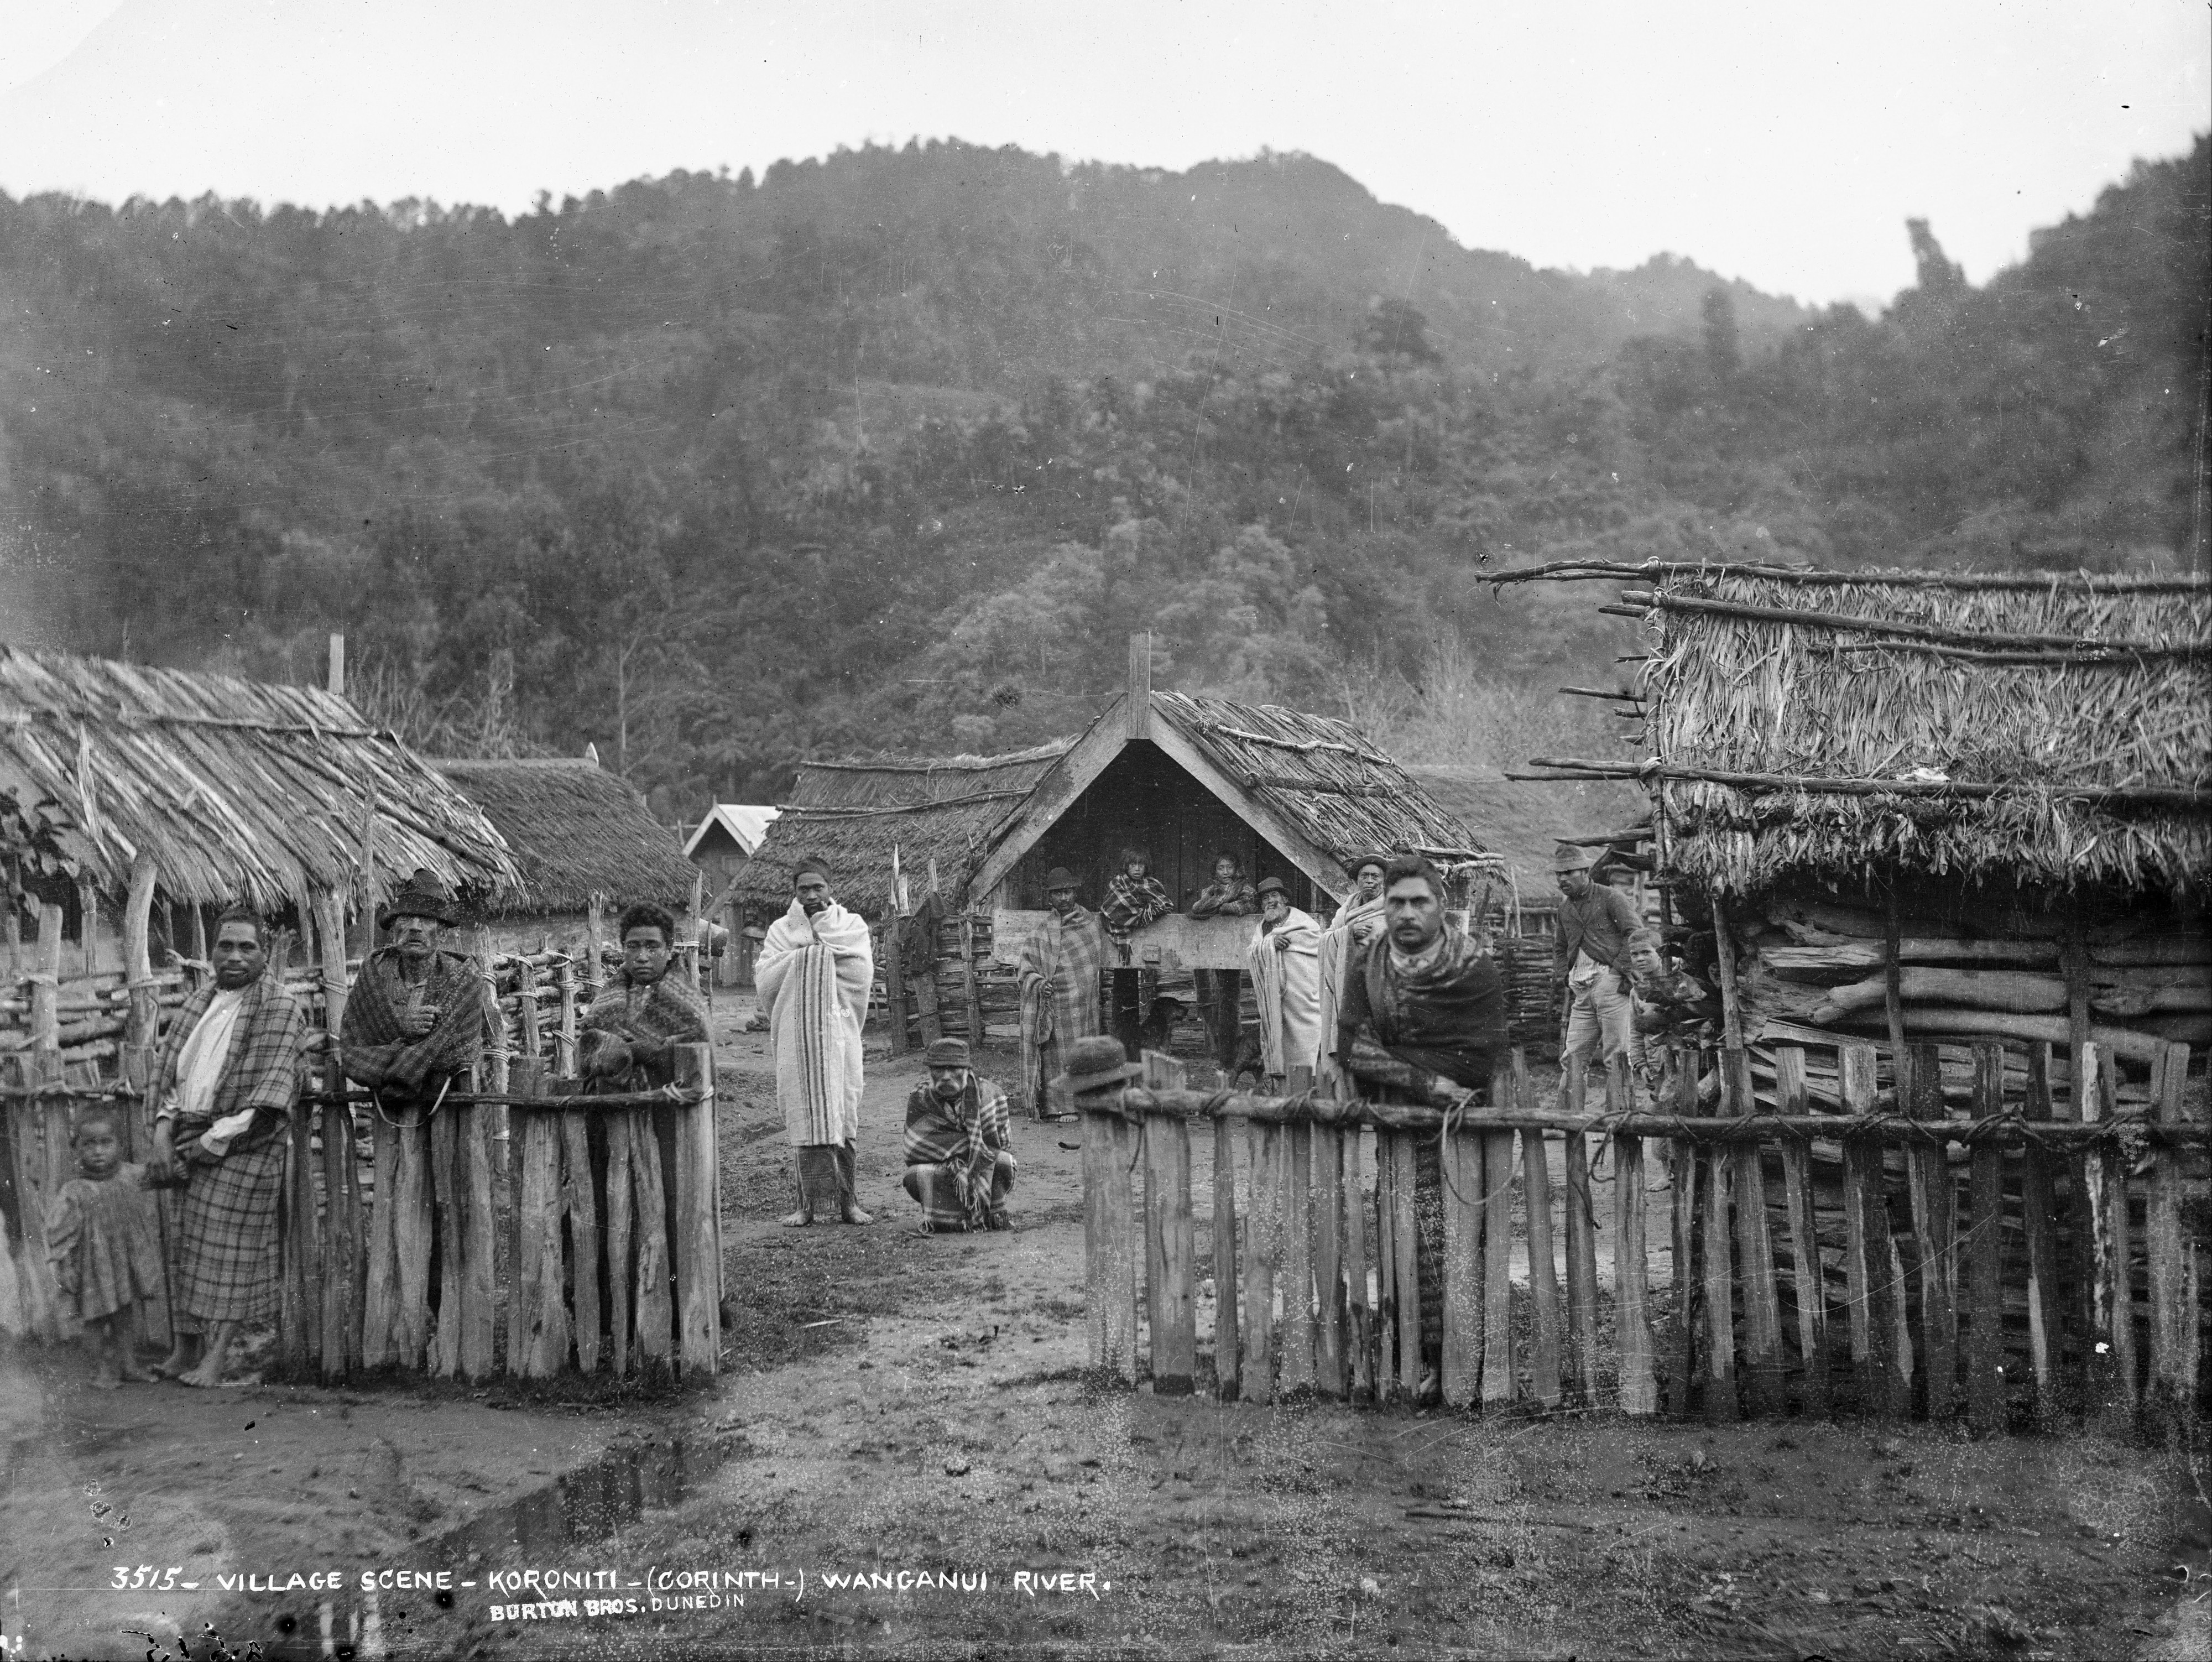 Alfred Burton - Village scene, Koriniti (Corinth), Wanganui (sic) River - Google Art Project